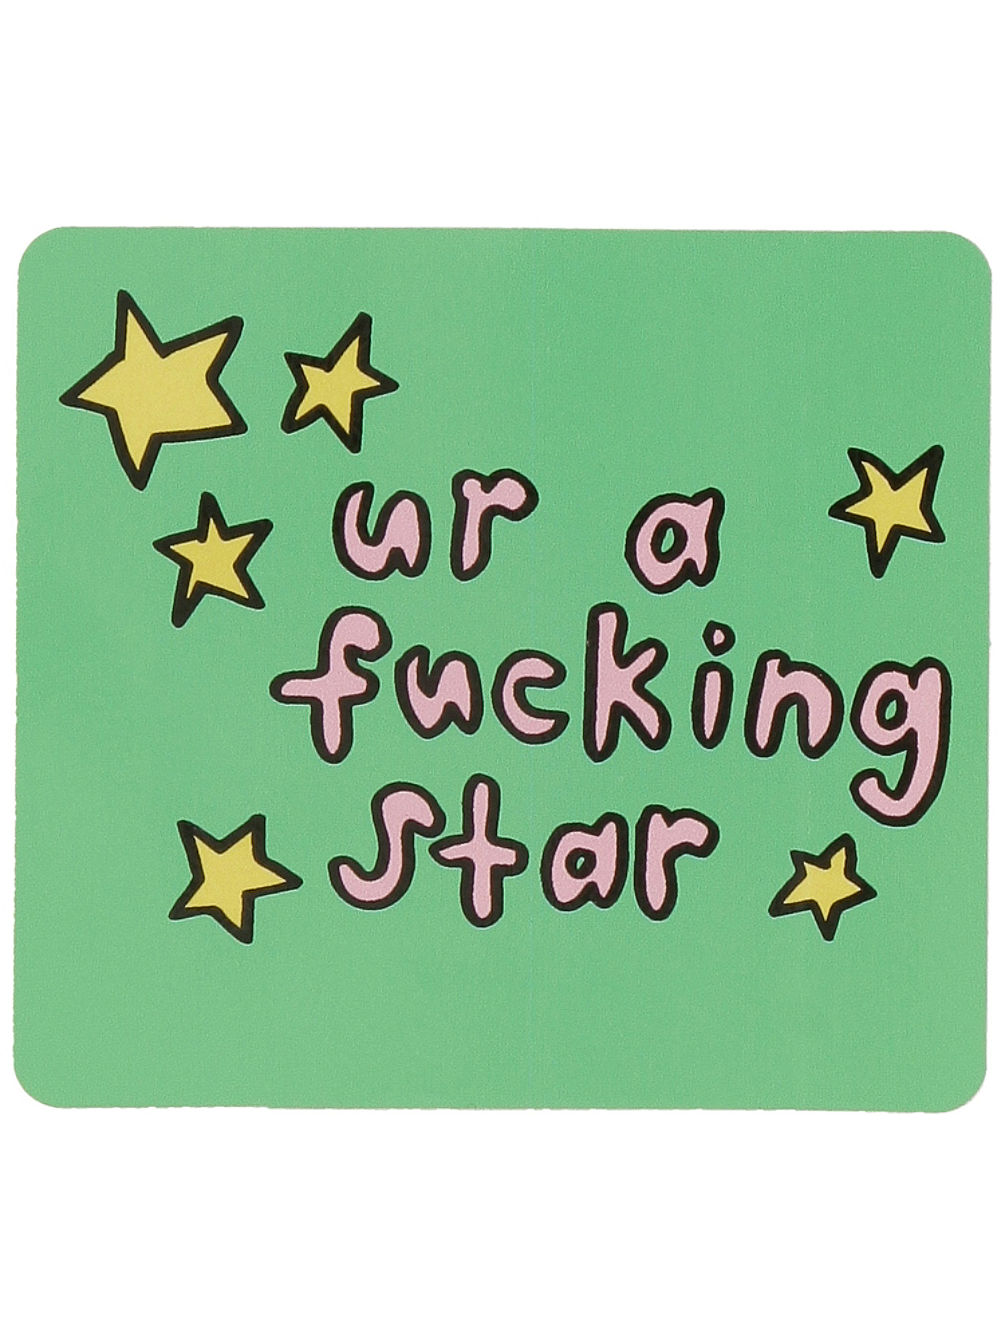 Ur a Star Sticker